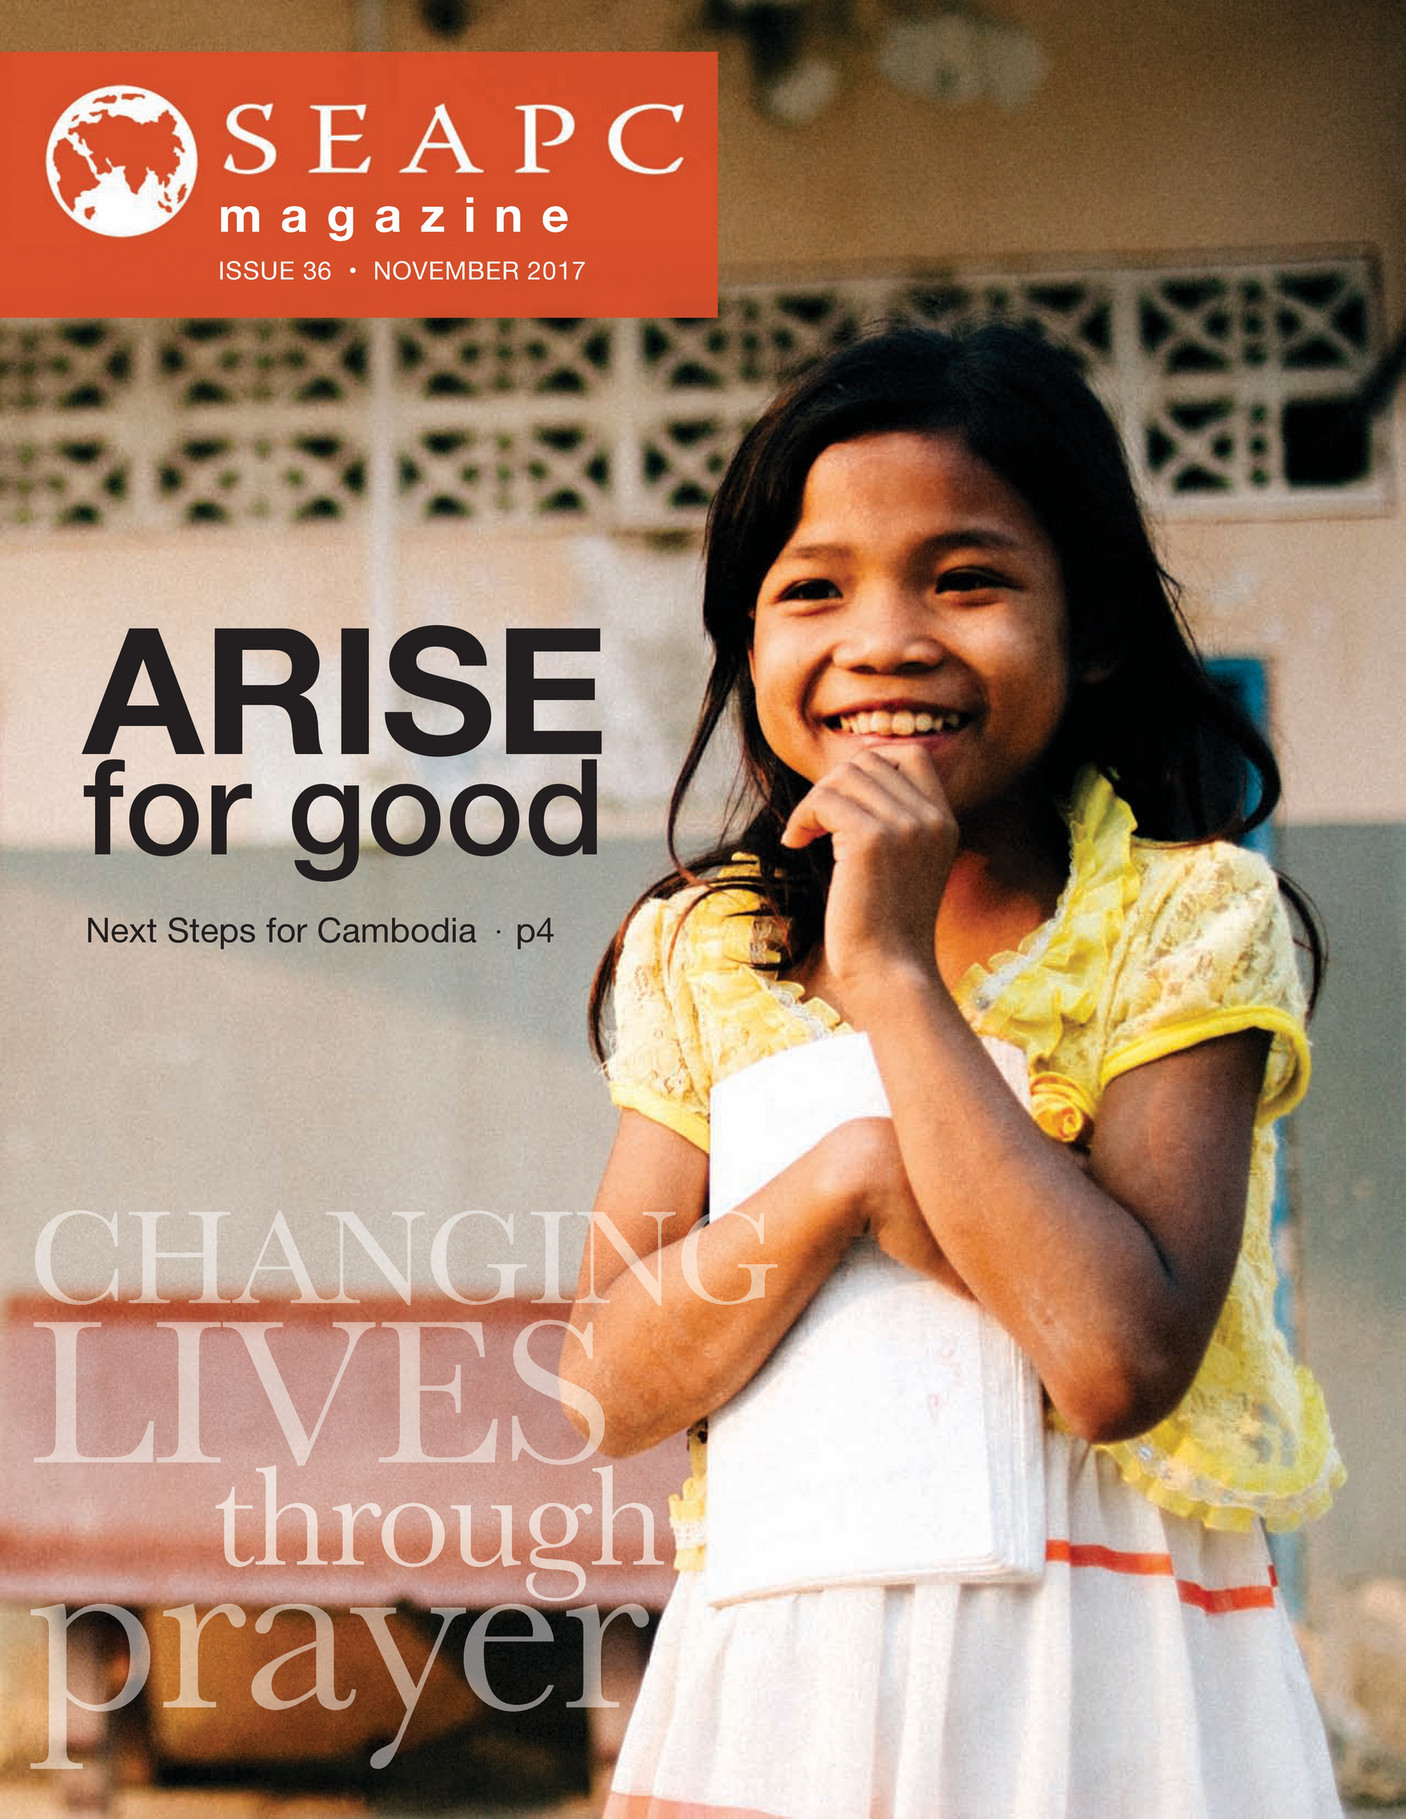 south-east-asia-prayer-center-seapc-magazine-november-2017-issue